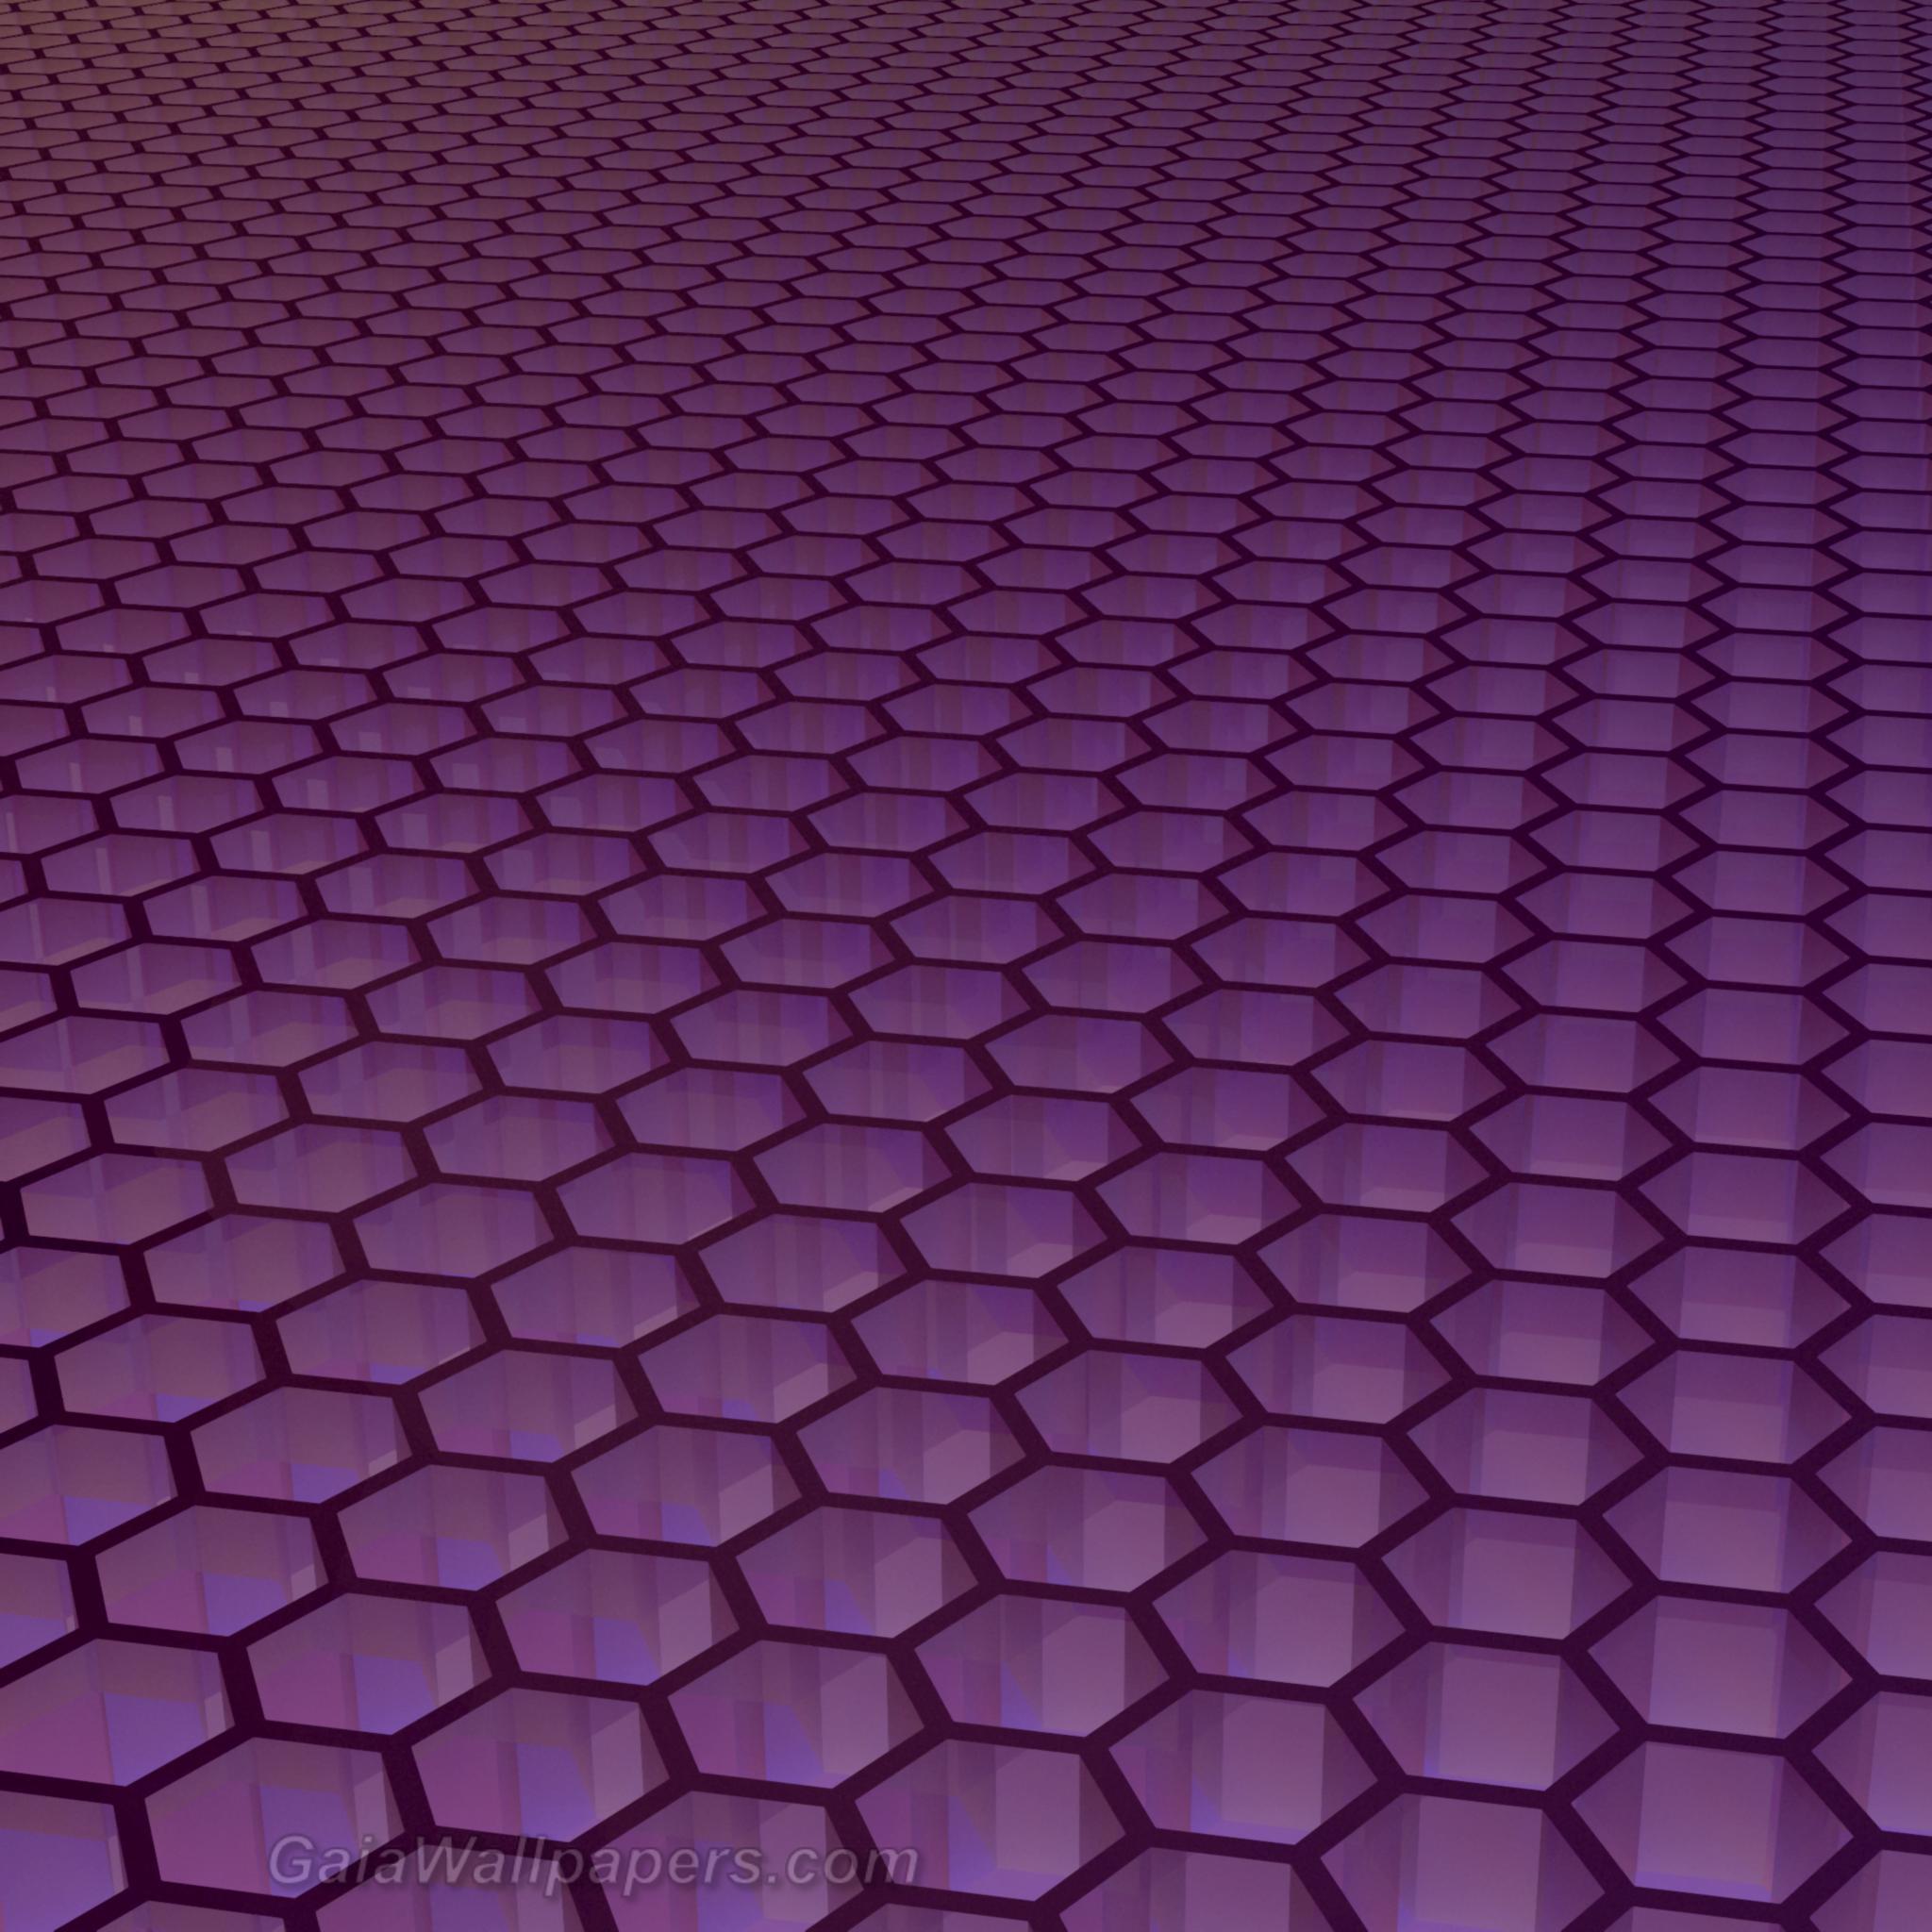 Infinite purple hexagonal grid wallpapers 2048x2048